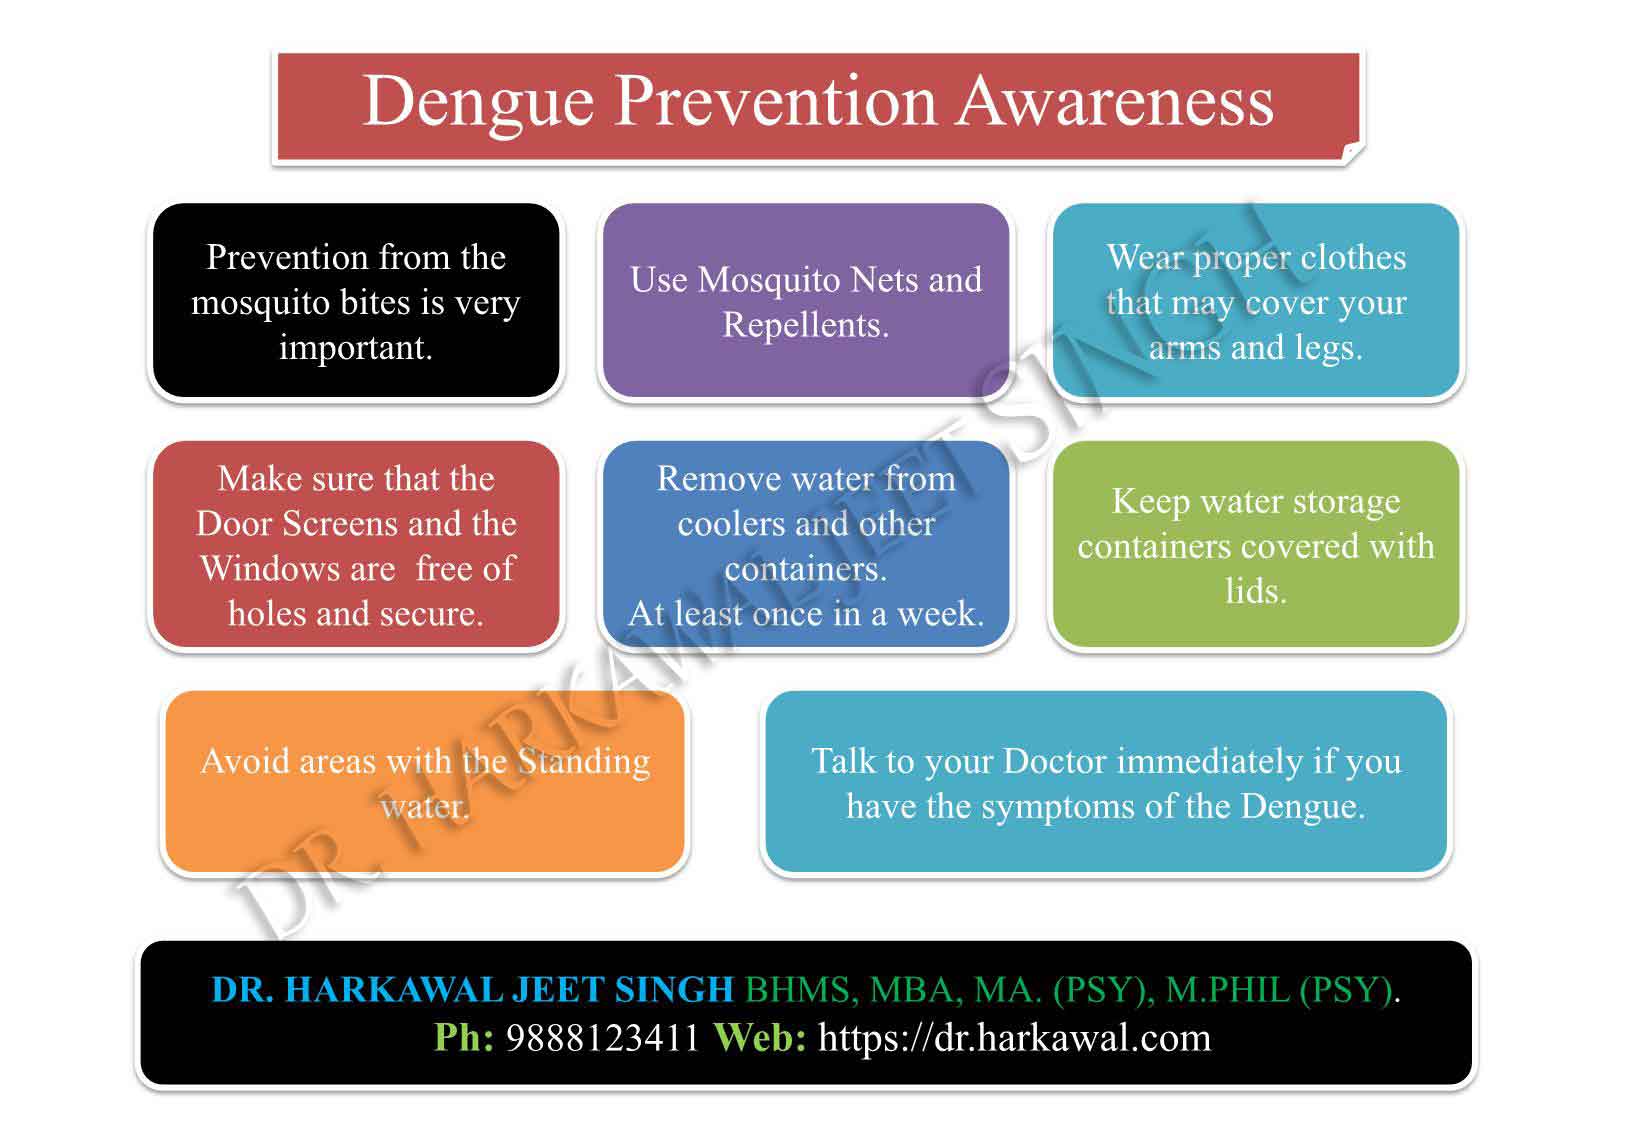 Dengue Awareness Image